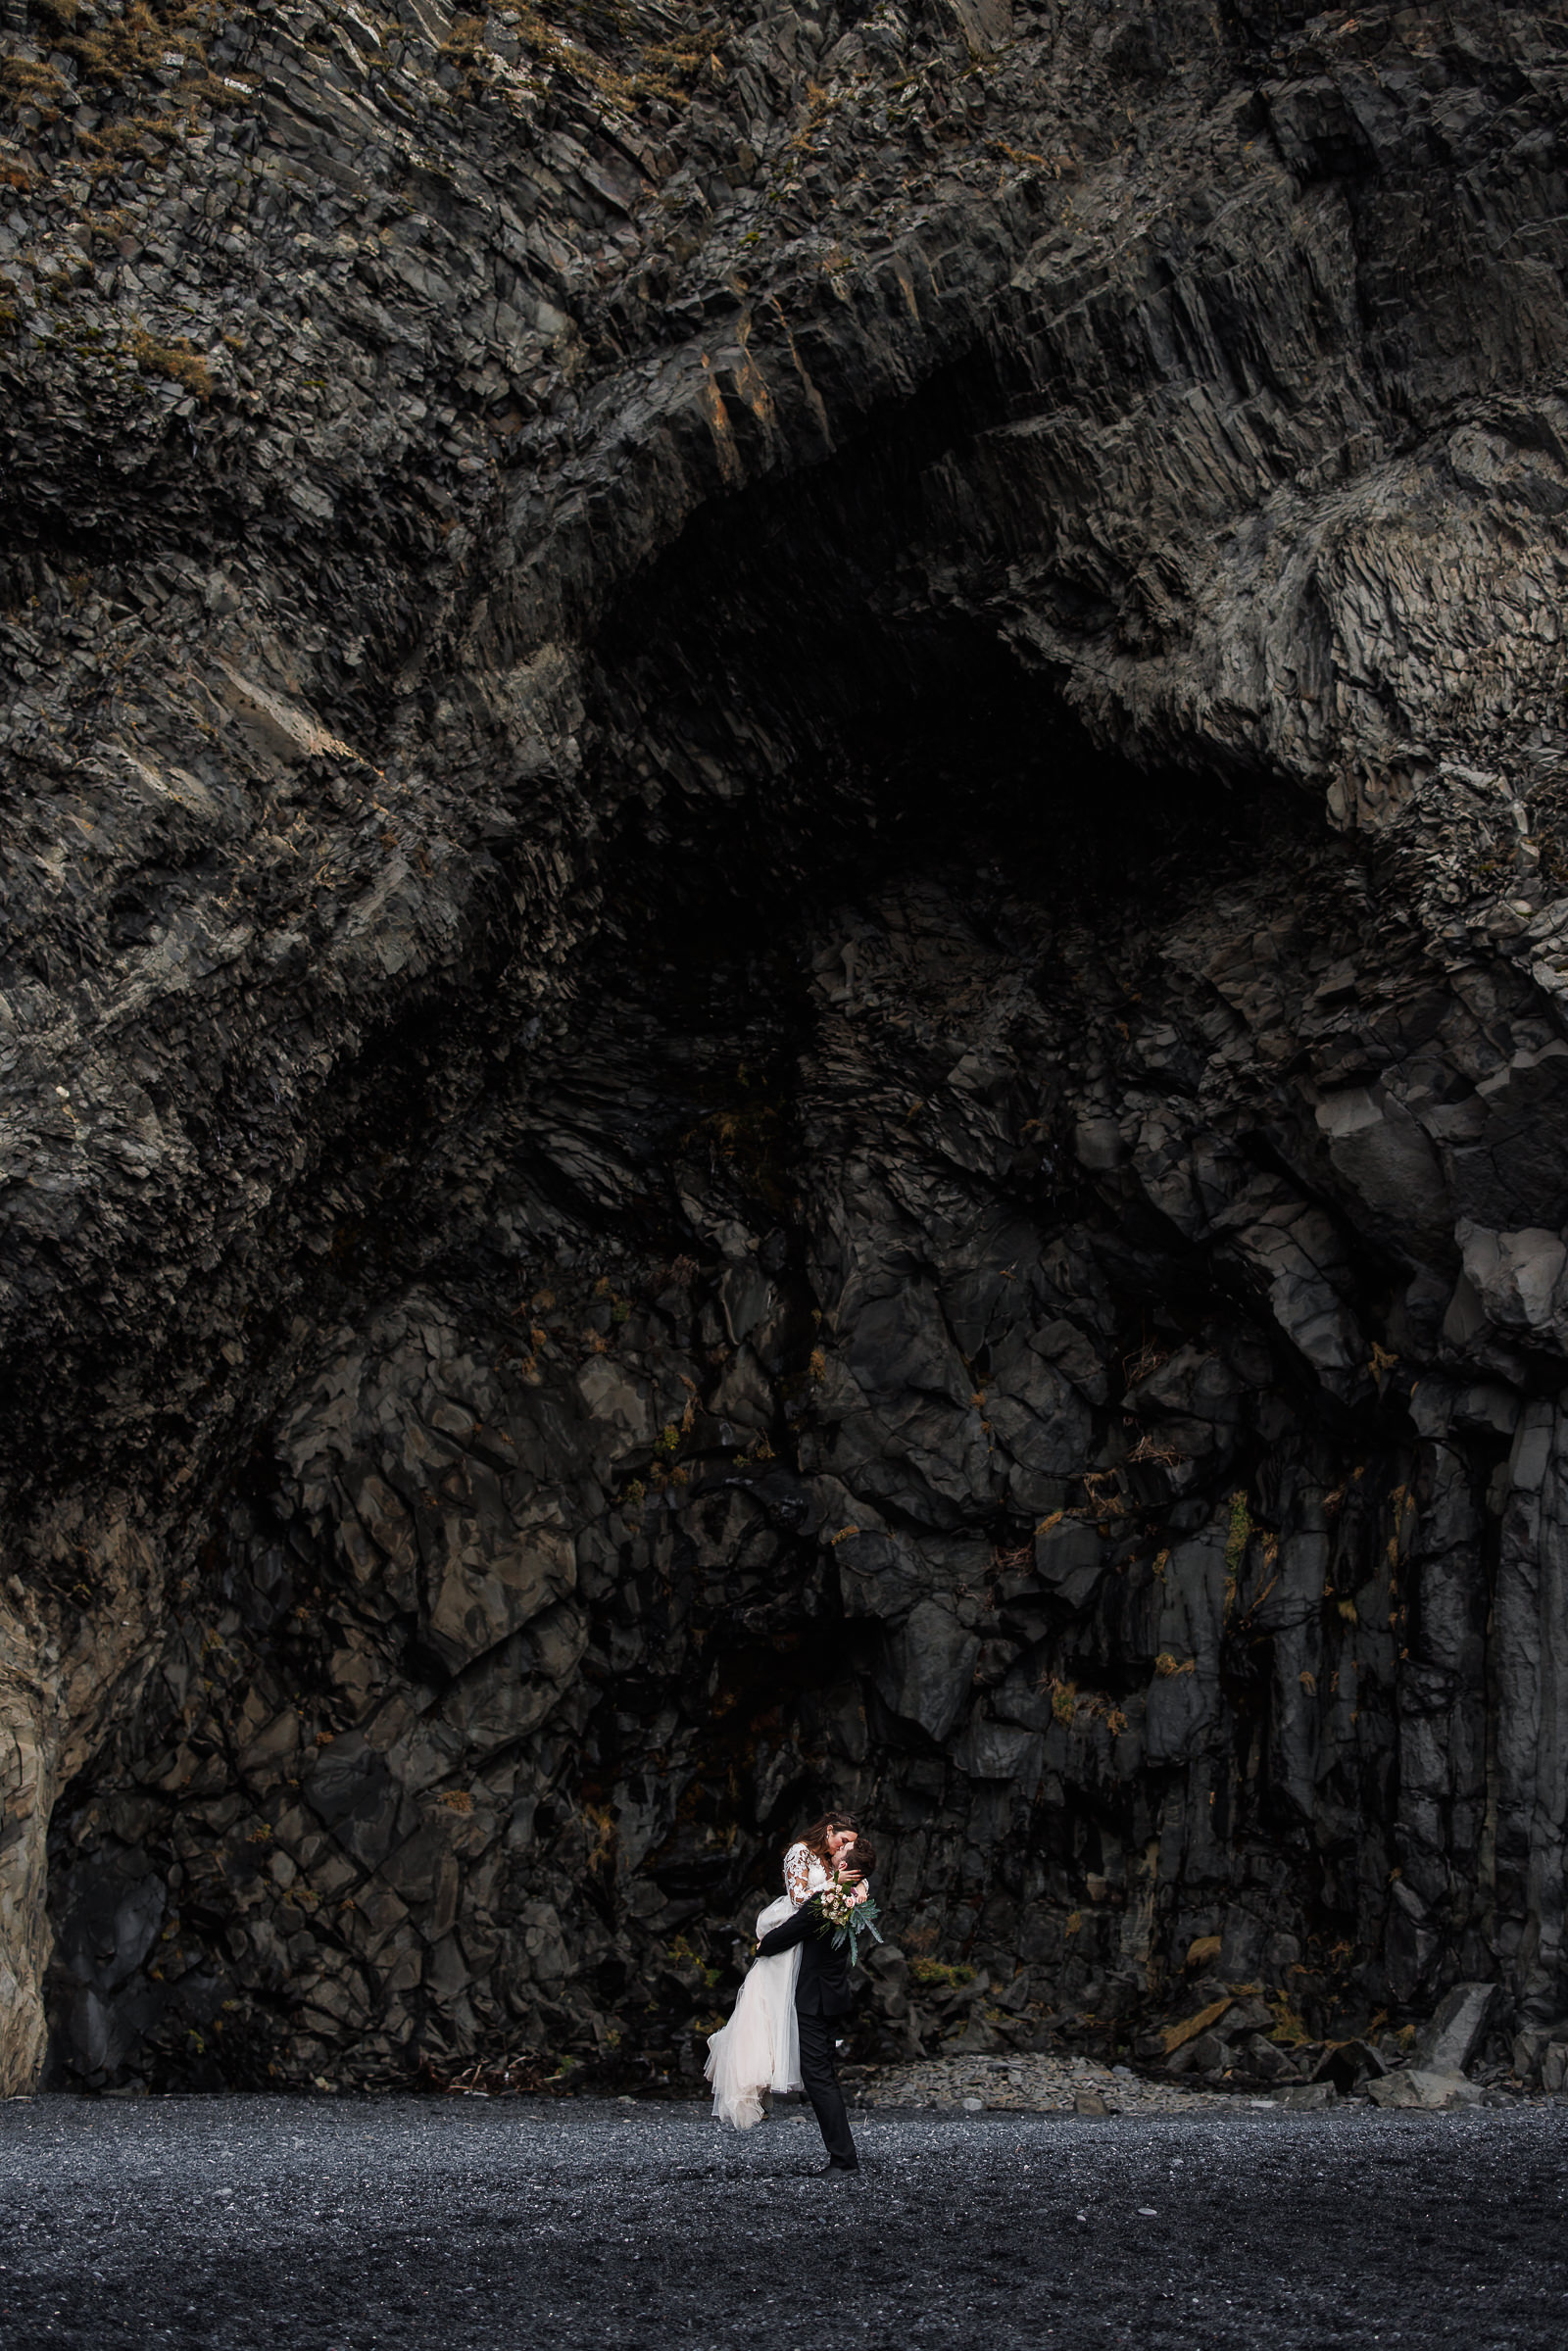 Couple embrace underneath the Basalt Columns of Reynisfjara, near Vik Iceland.